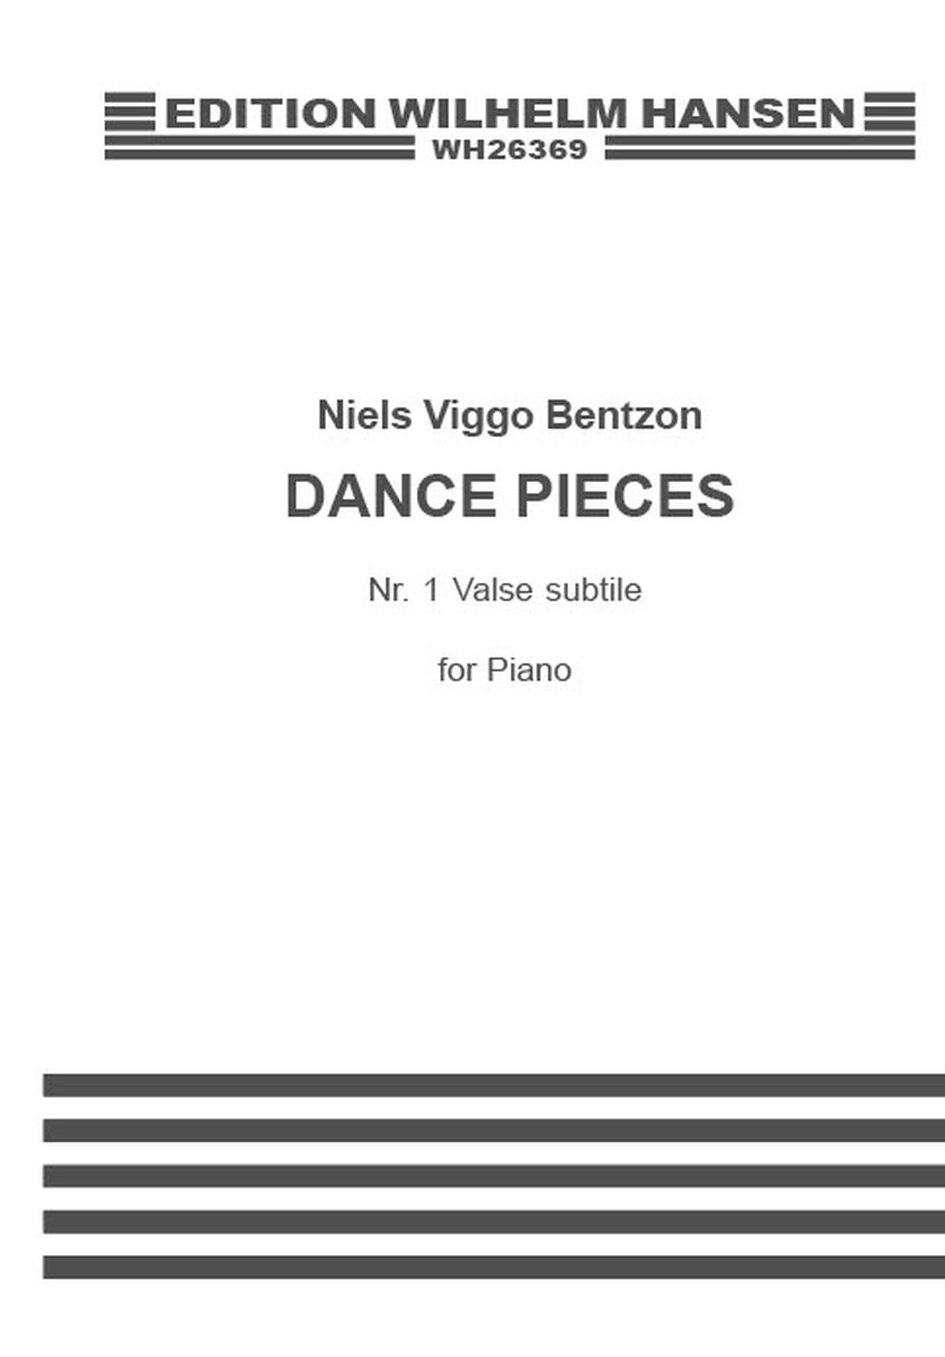 Niels Viggo Bentzon: Three Dance Pieces Op.45- No.1 Valse Subtile